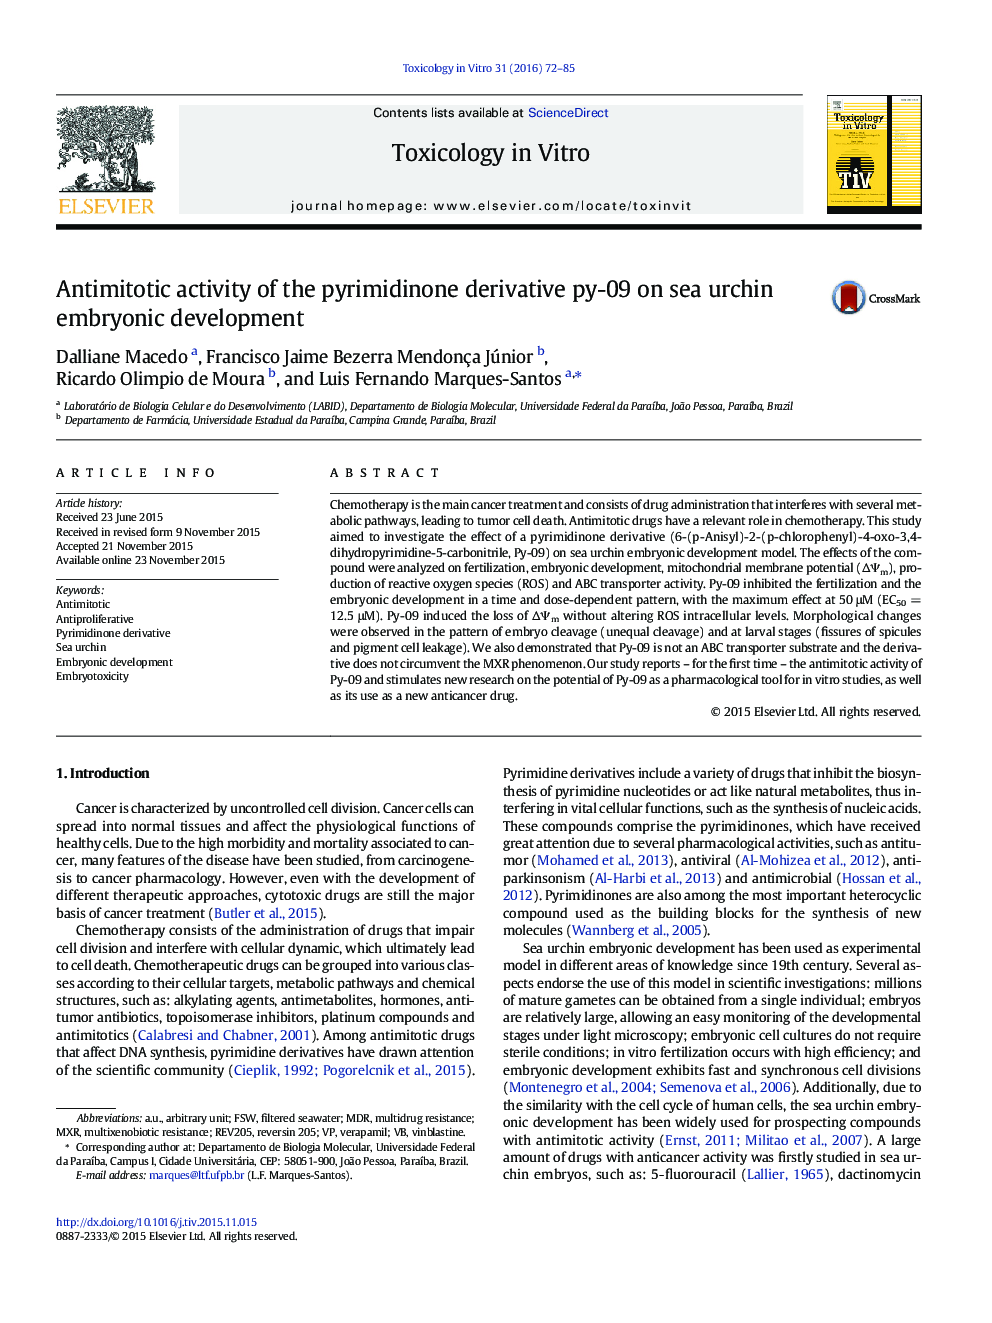 Antimitotic activity of the pyrimidinone derivative py-09 on sea urchin embryonic development